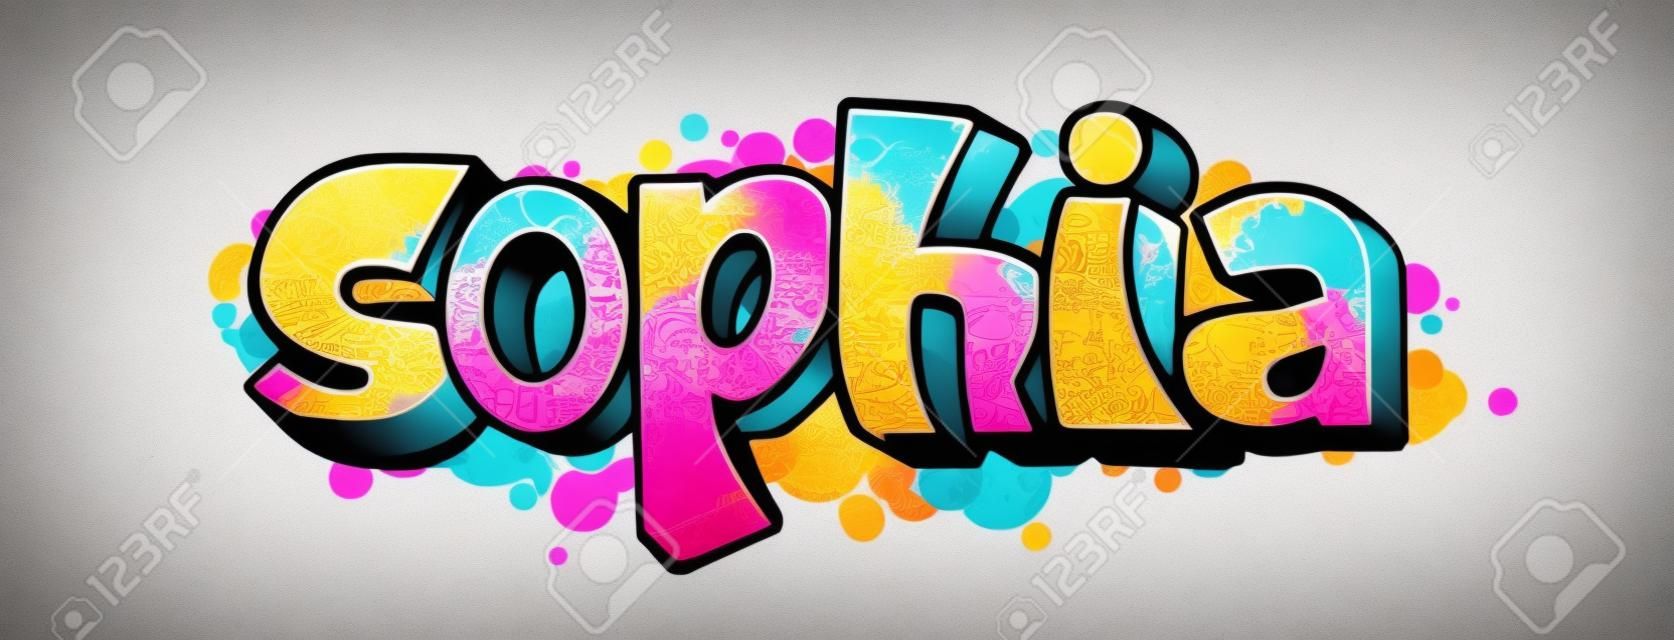 Sophia-Namenstext-Graffiti-Wort-Design